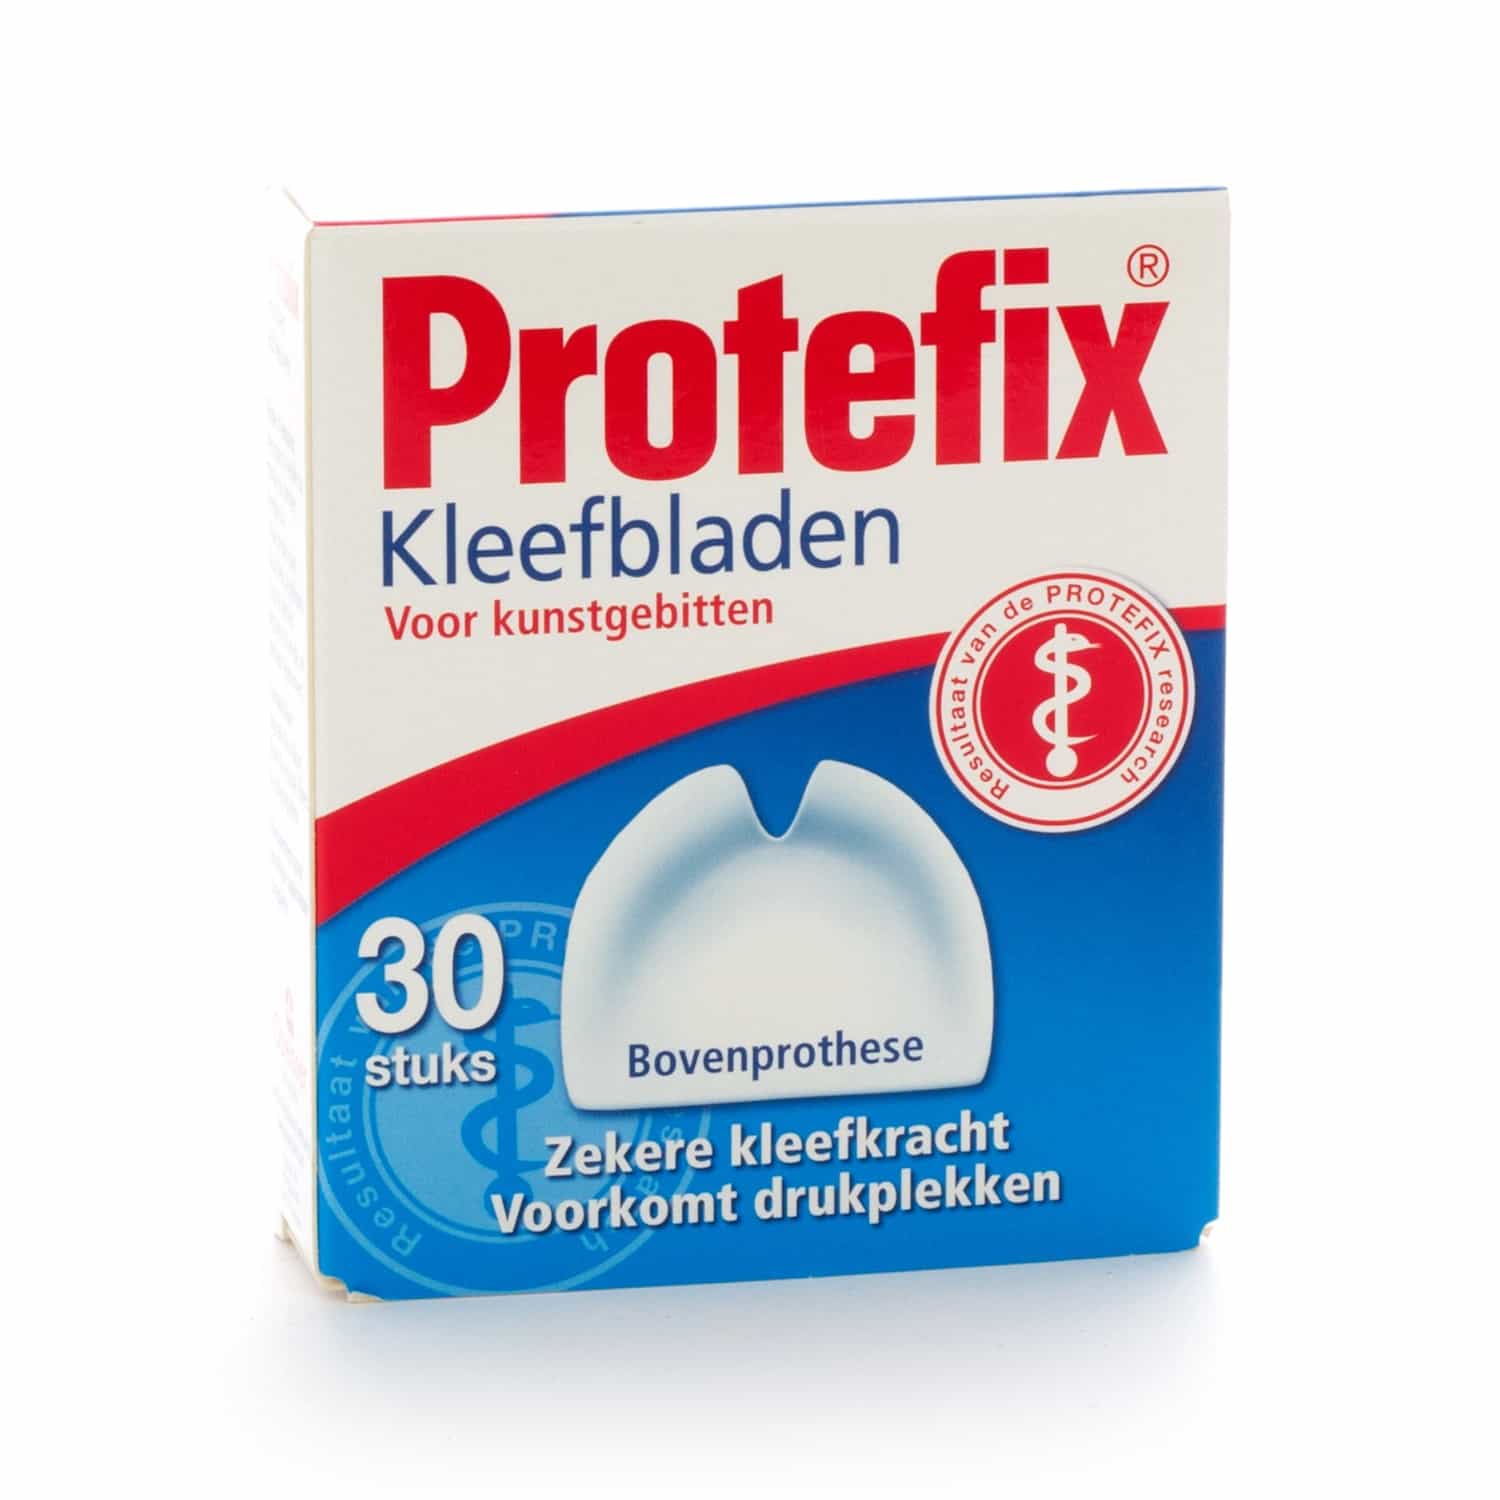 Protefix Kleefblad Bovenprothese